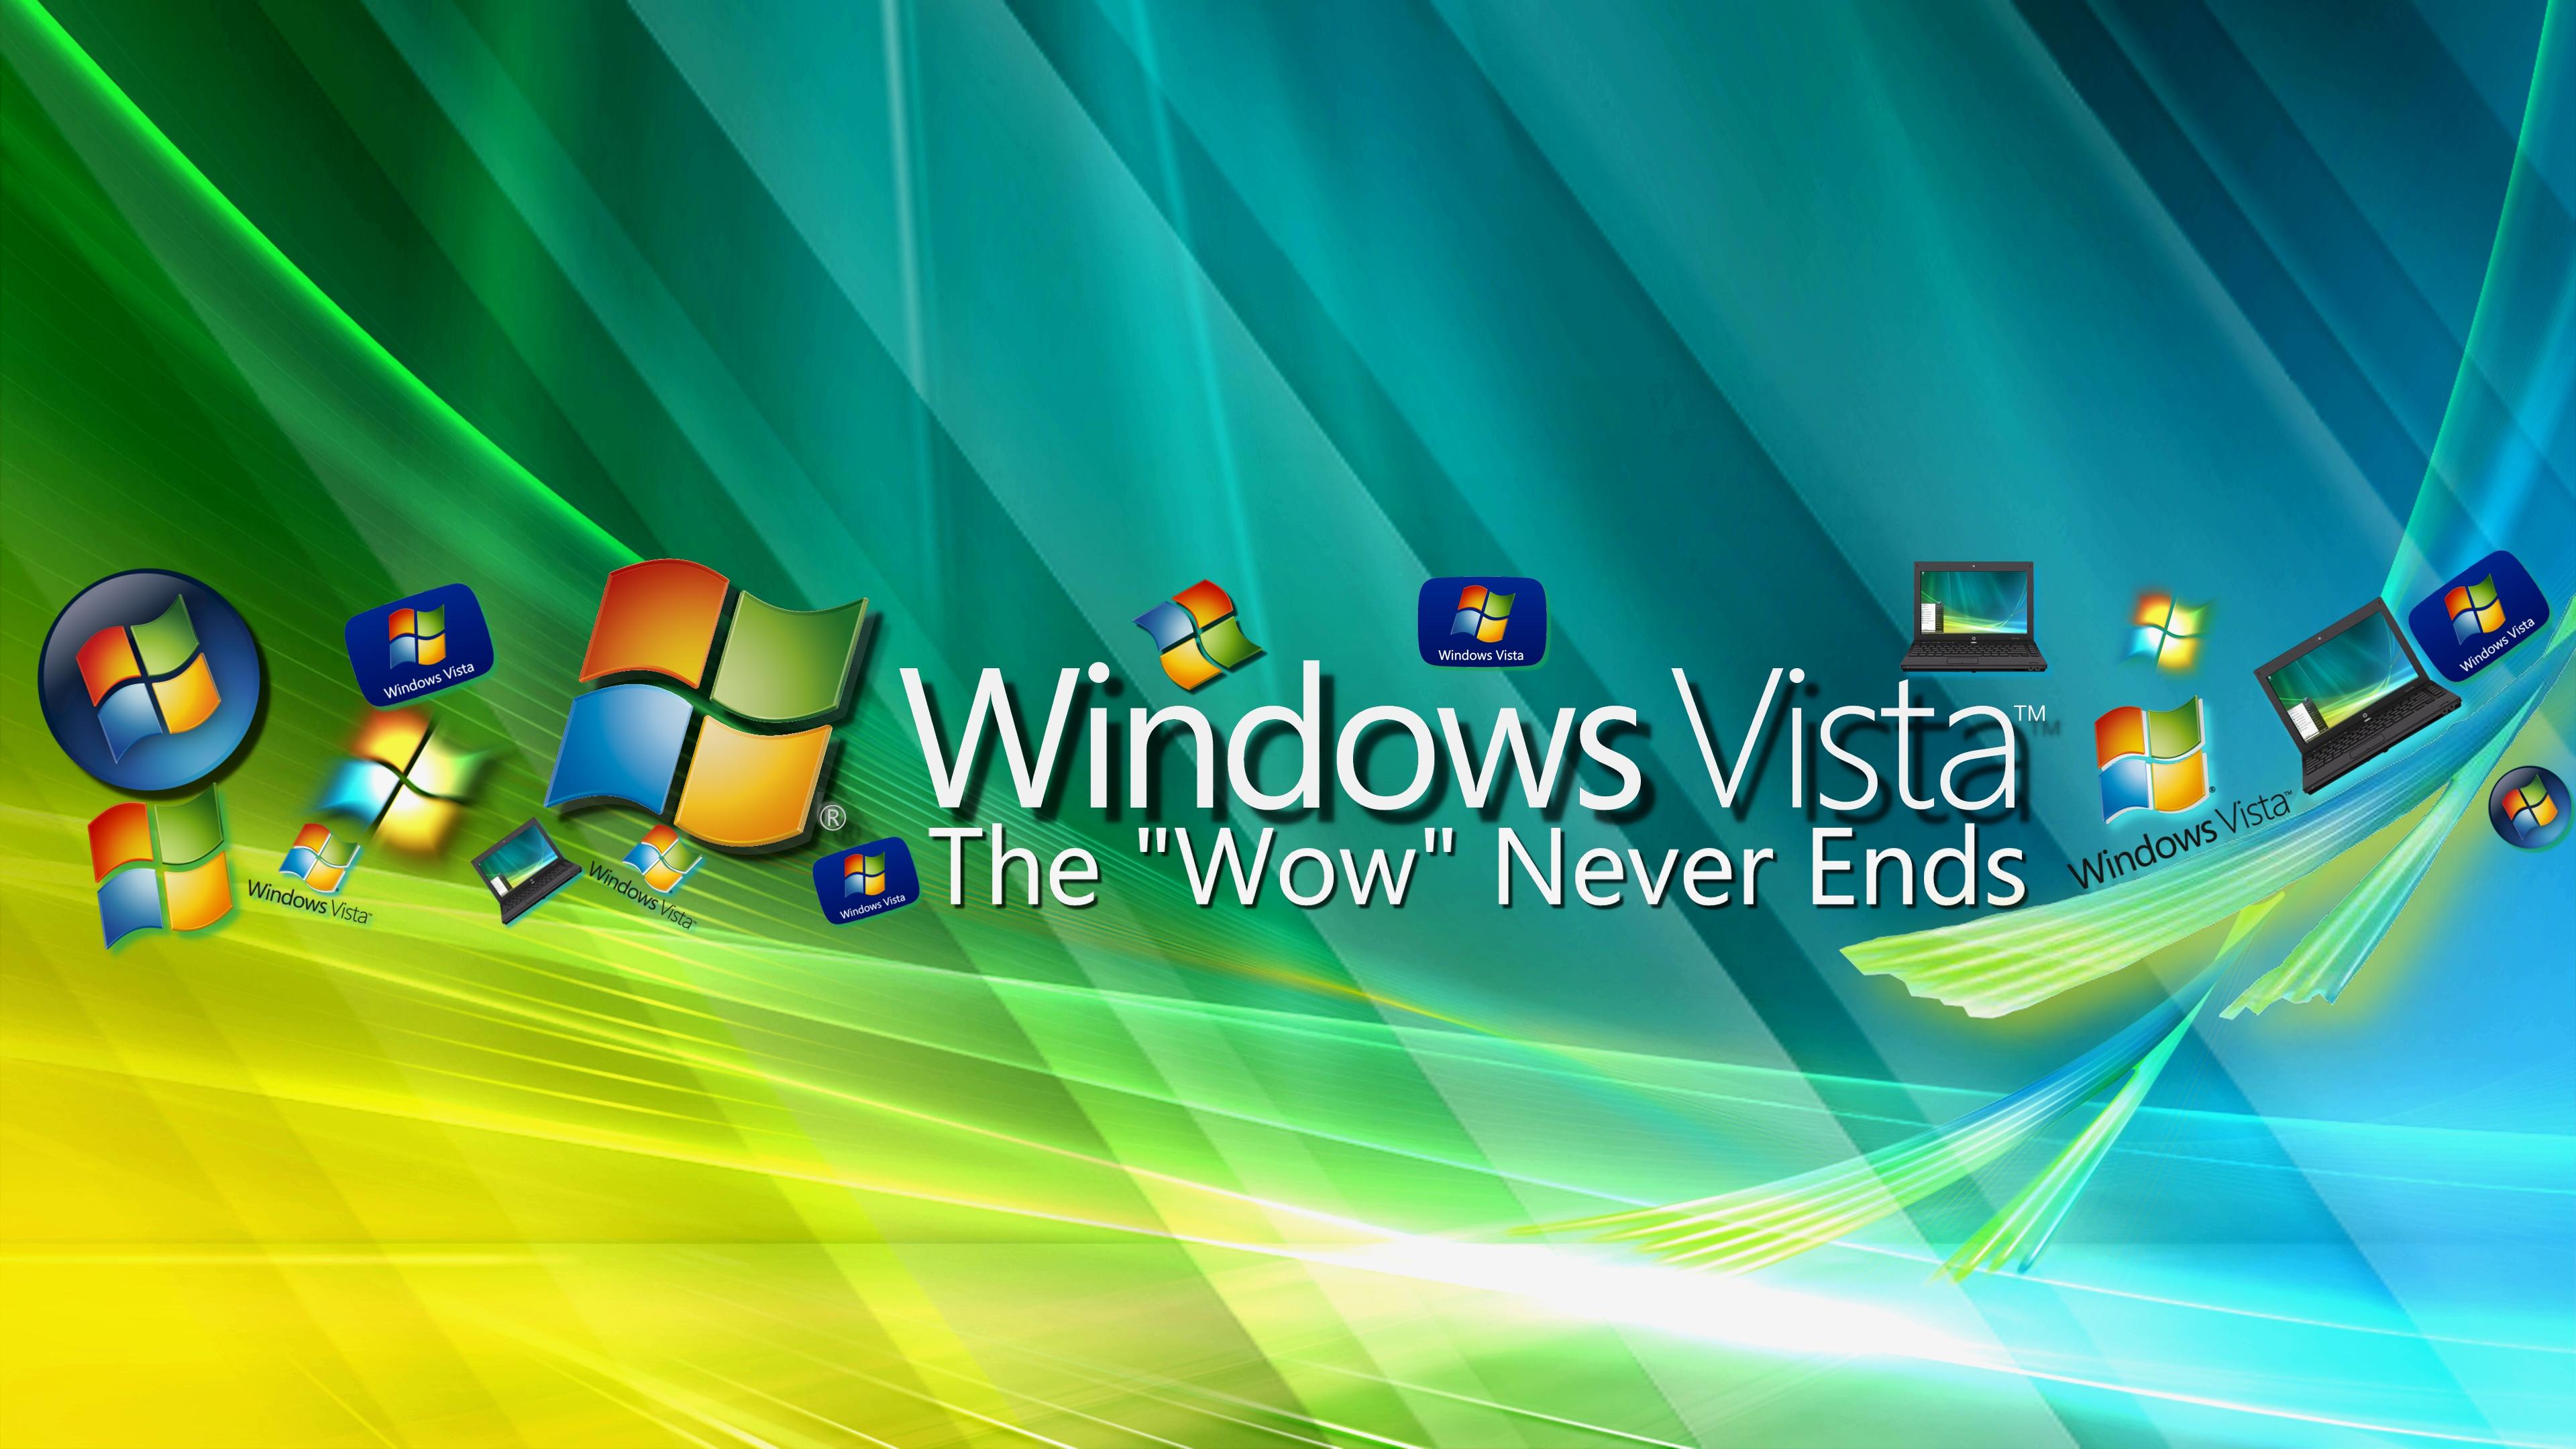 Windows Vista - MSFN
